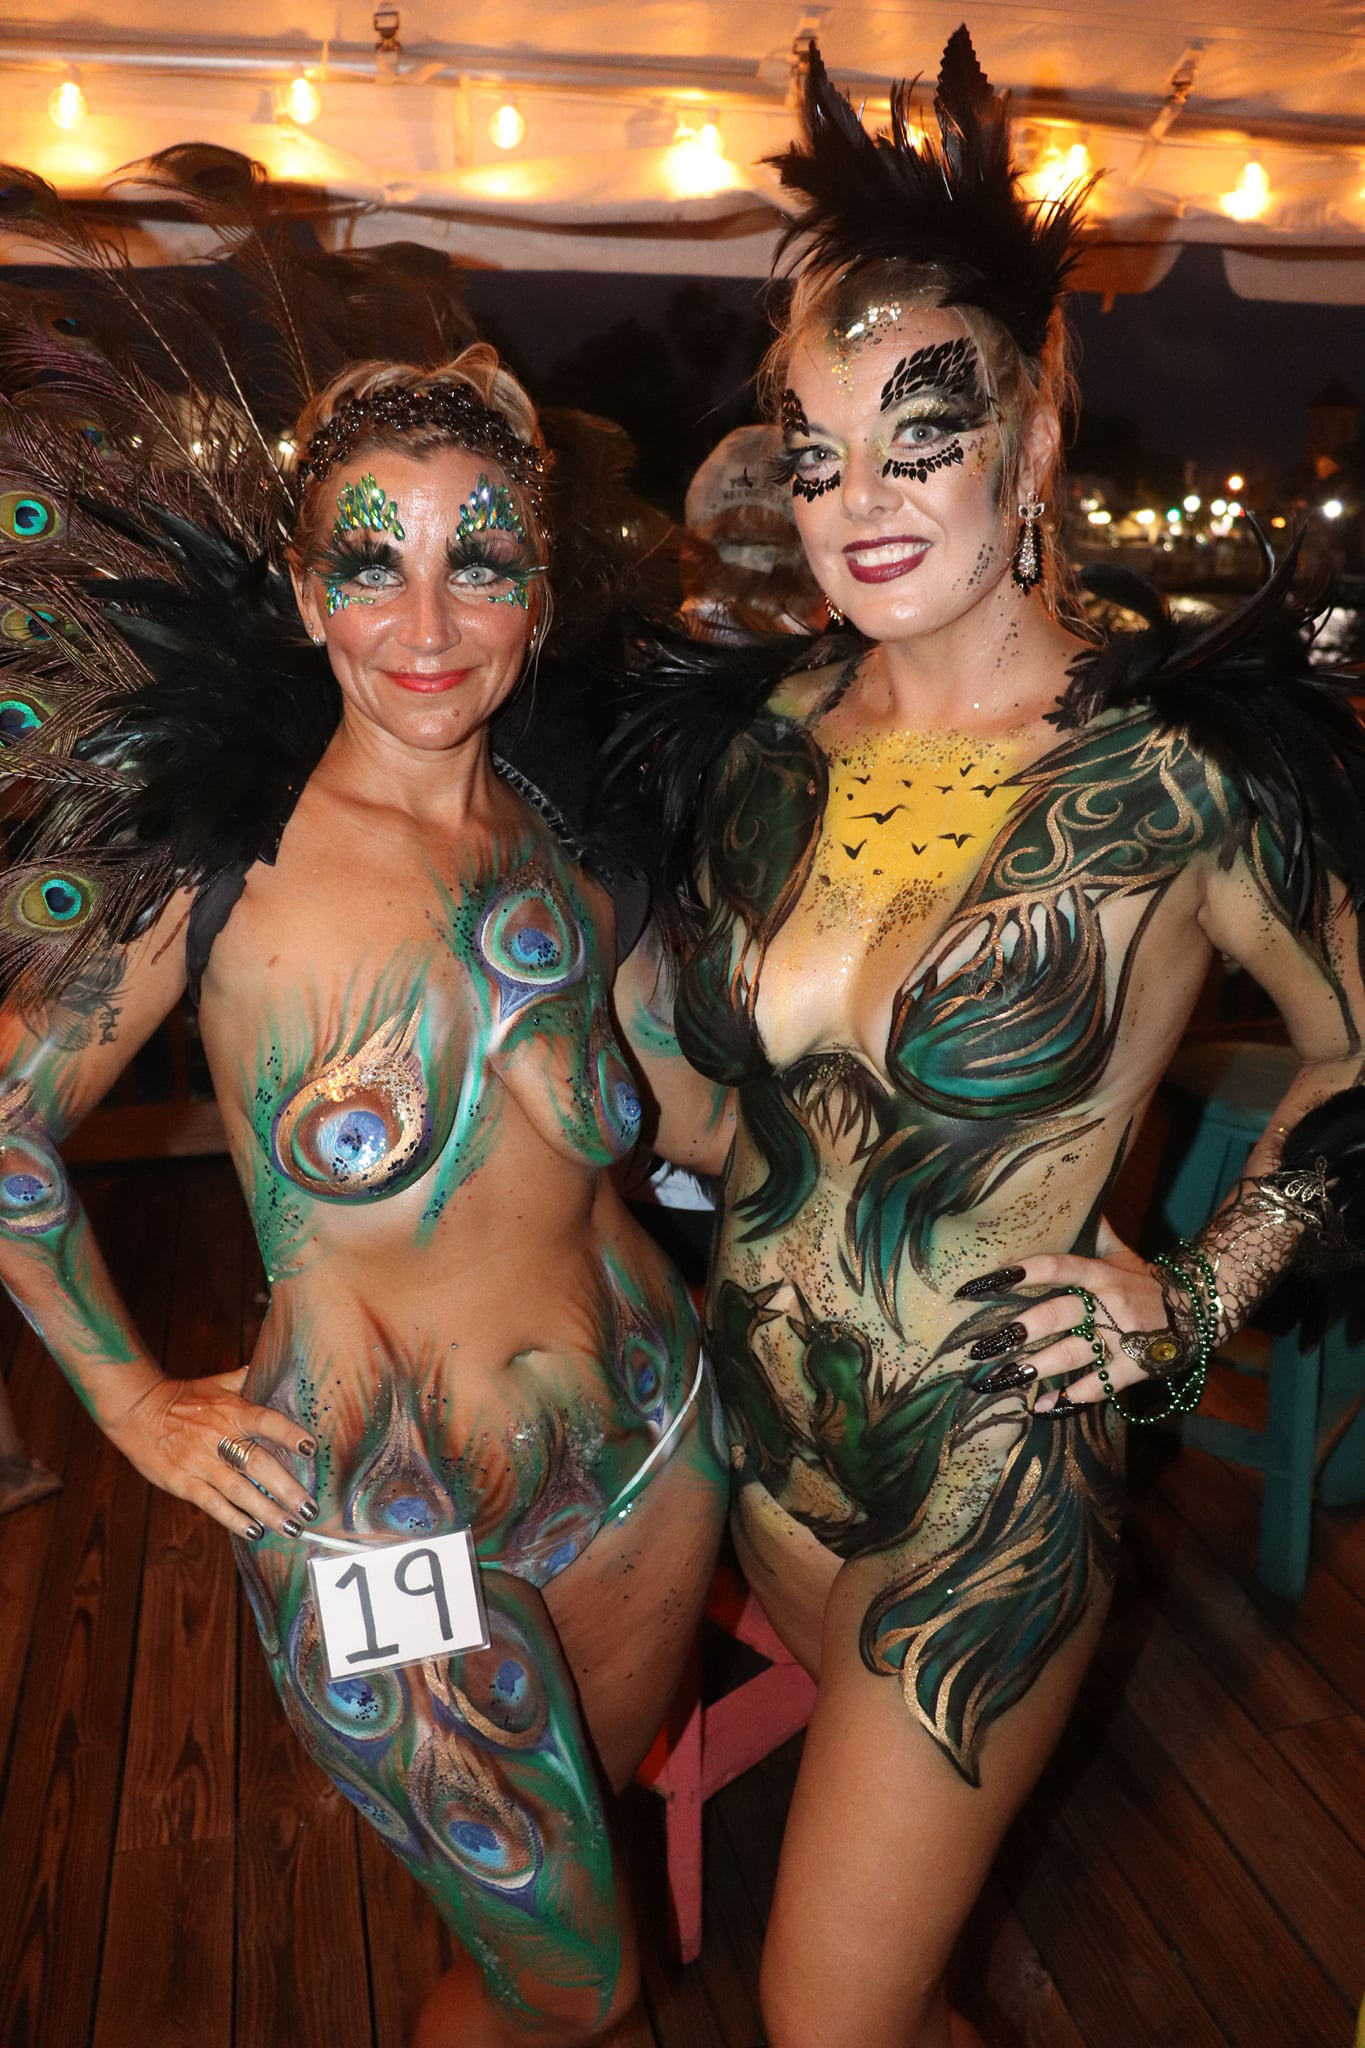 cj lassiter share fantasy fest nude pictures photos